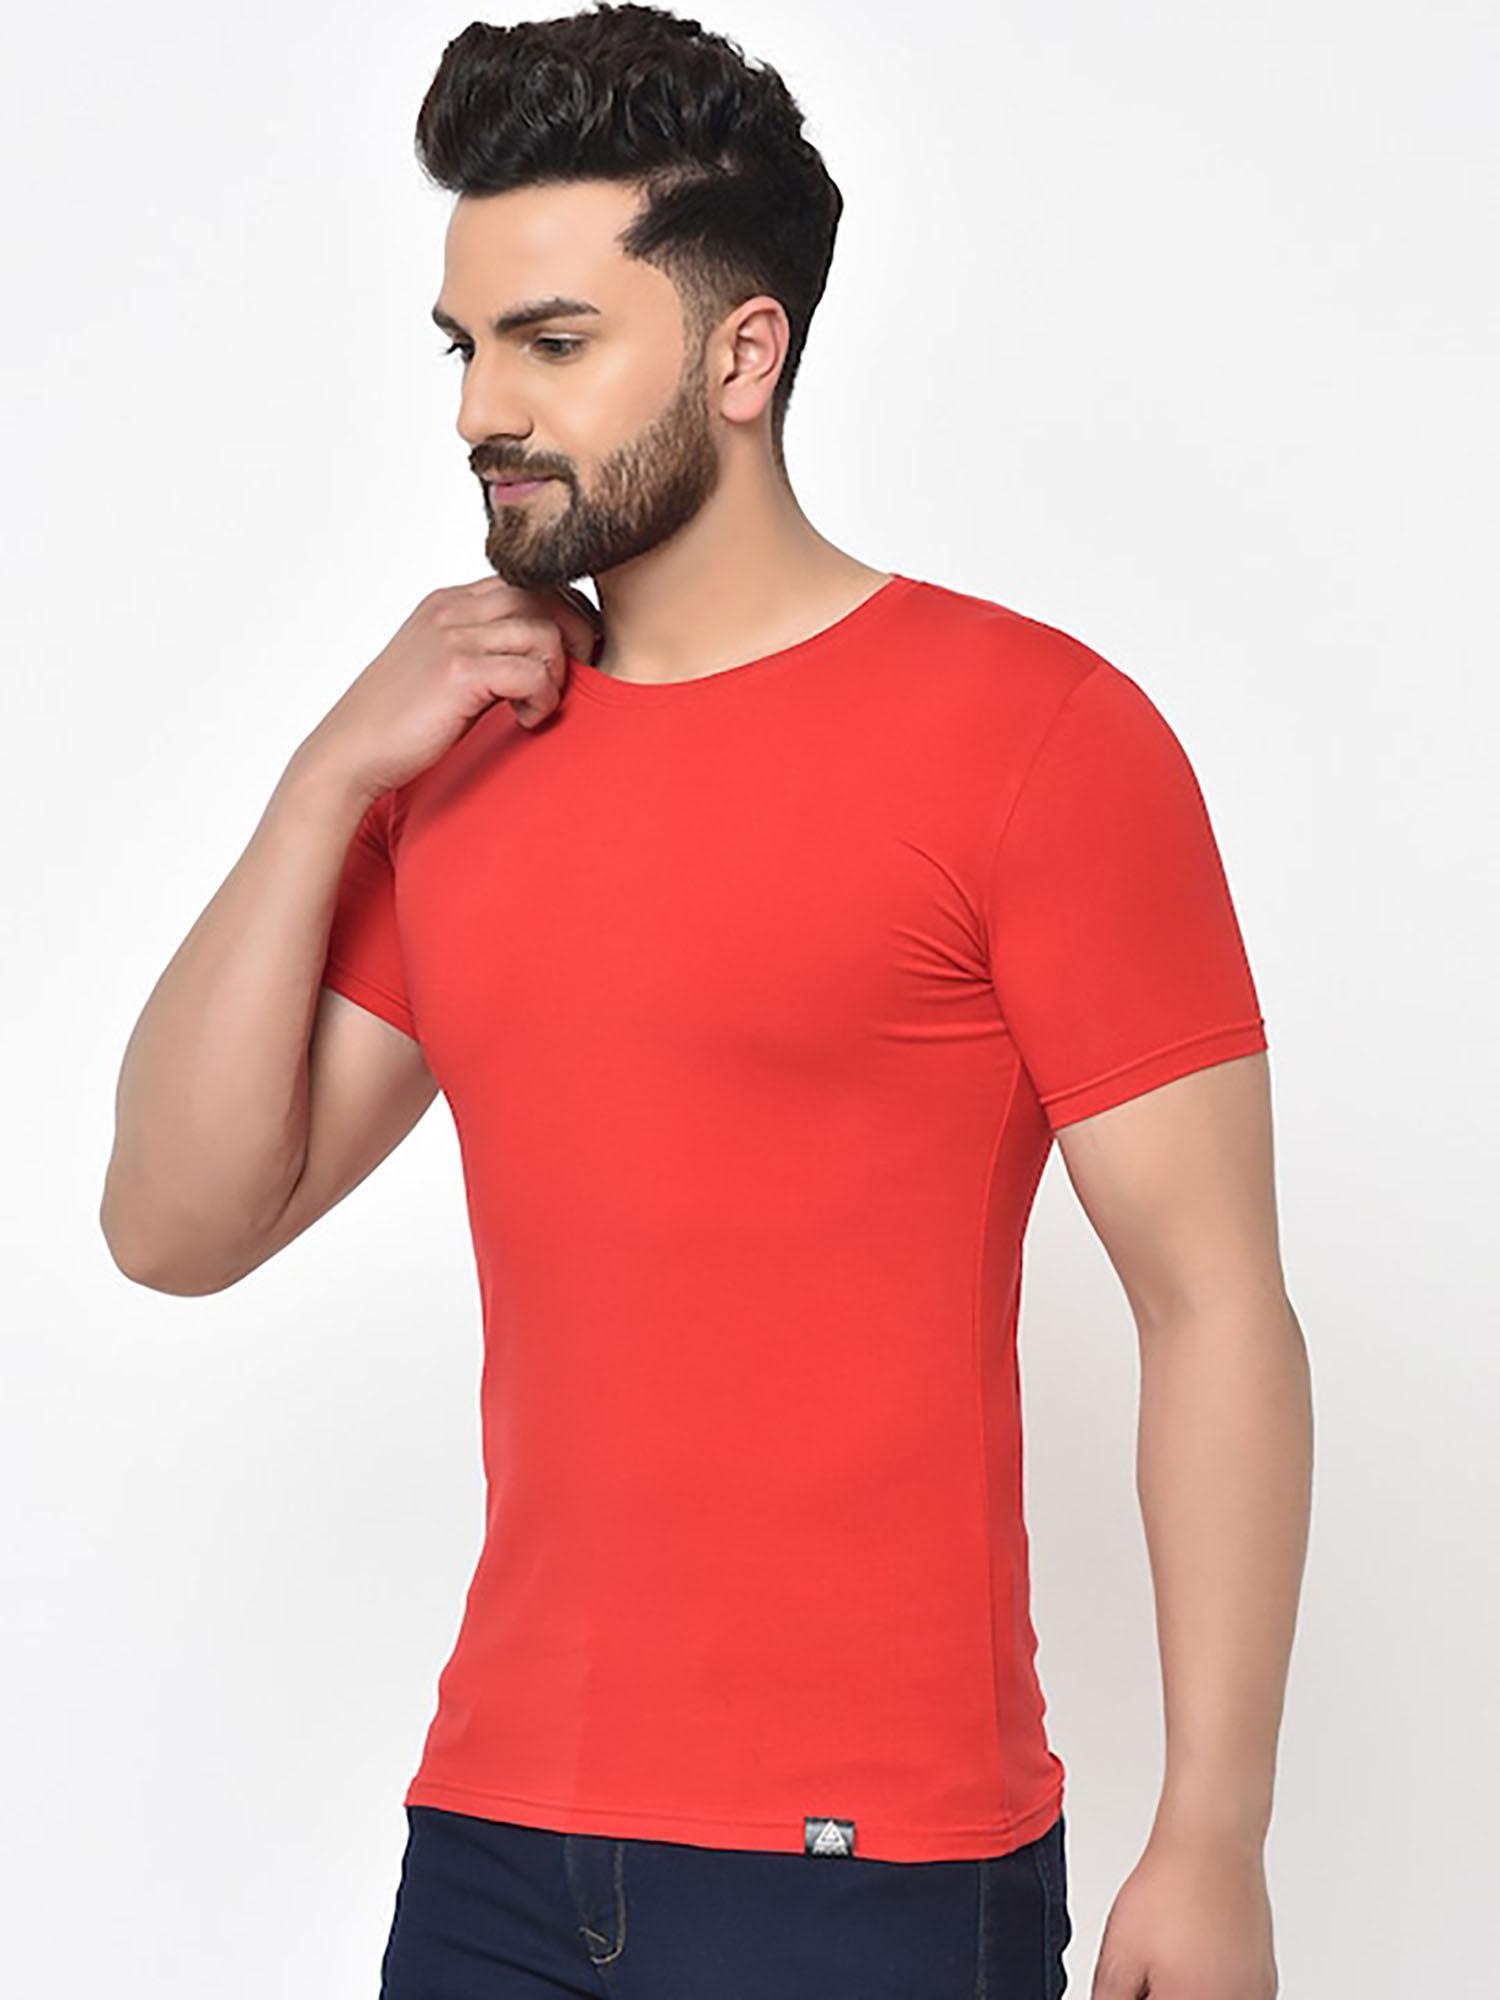 mens round neck red t-shirt